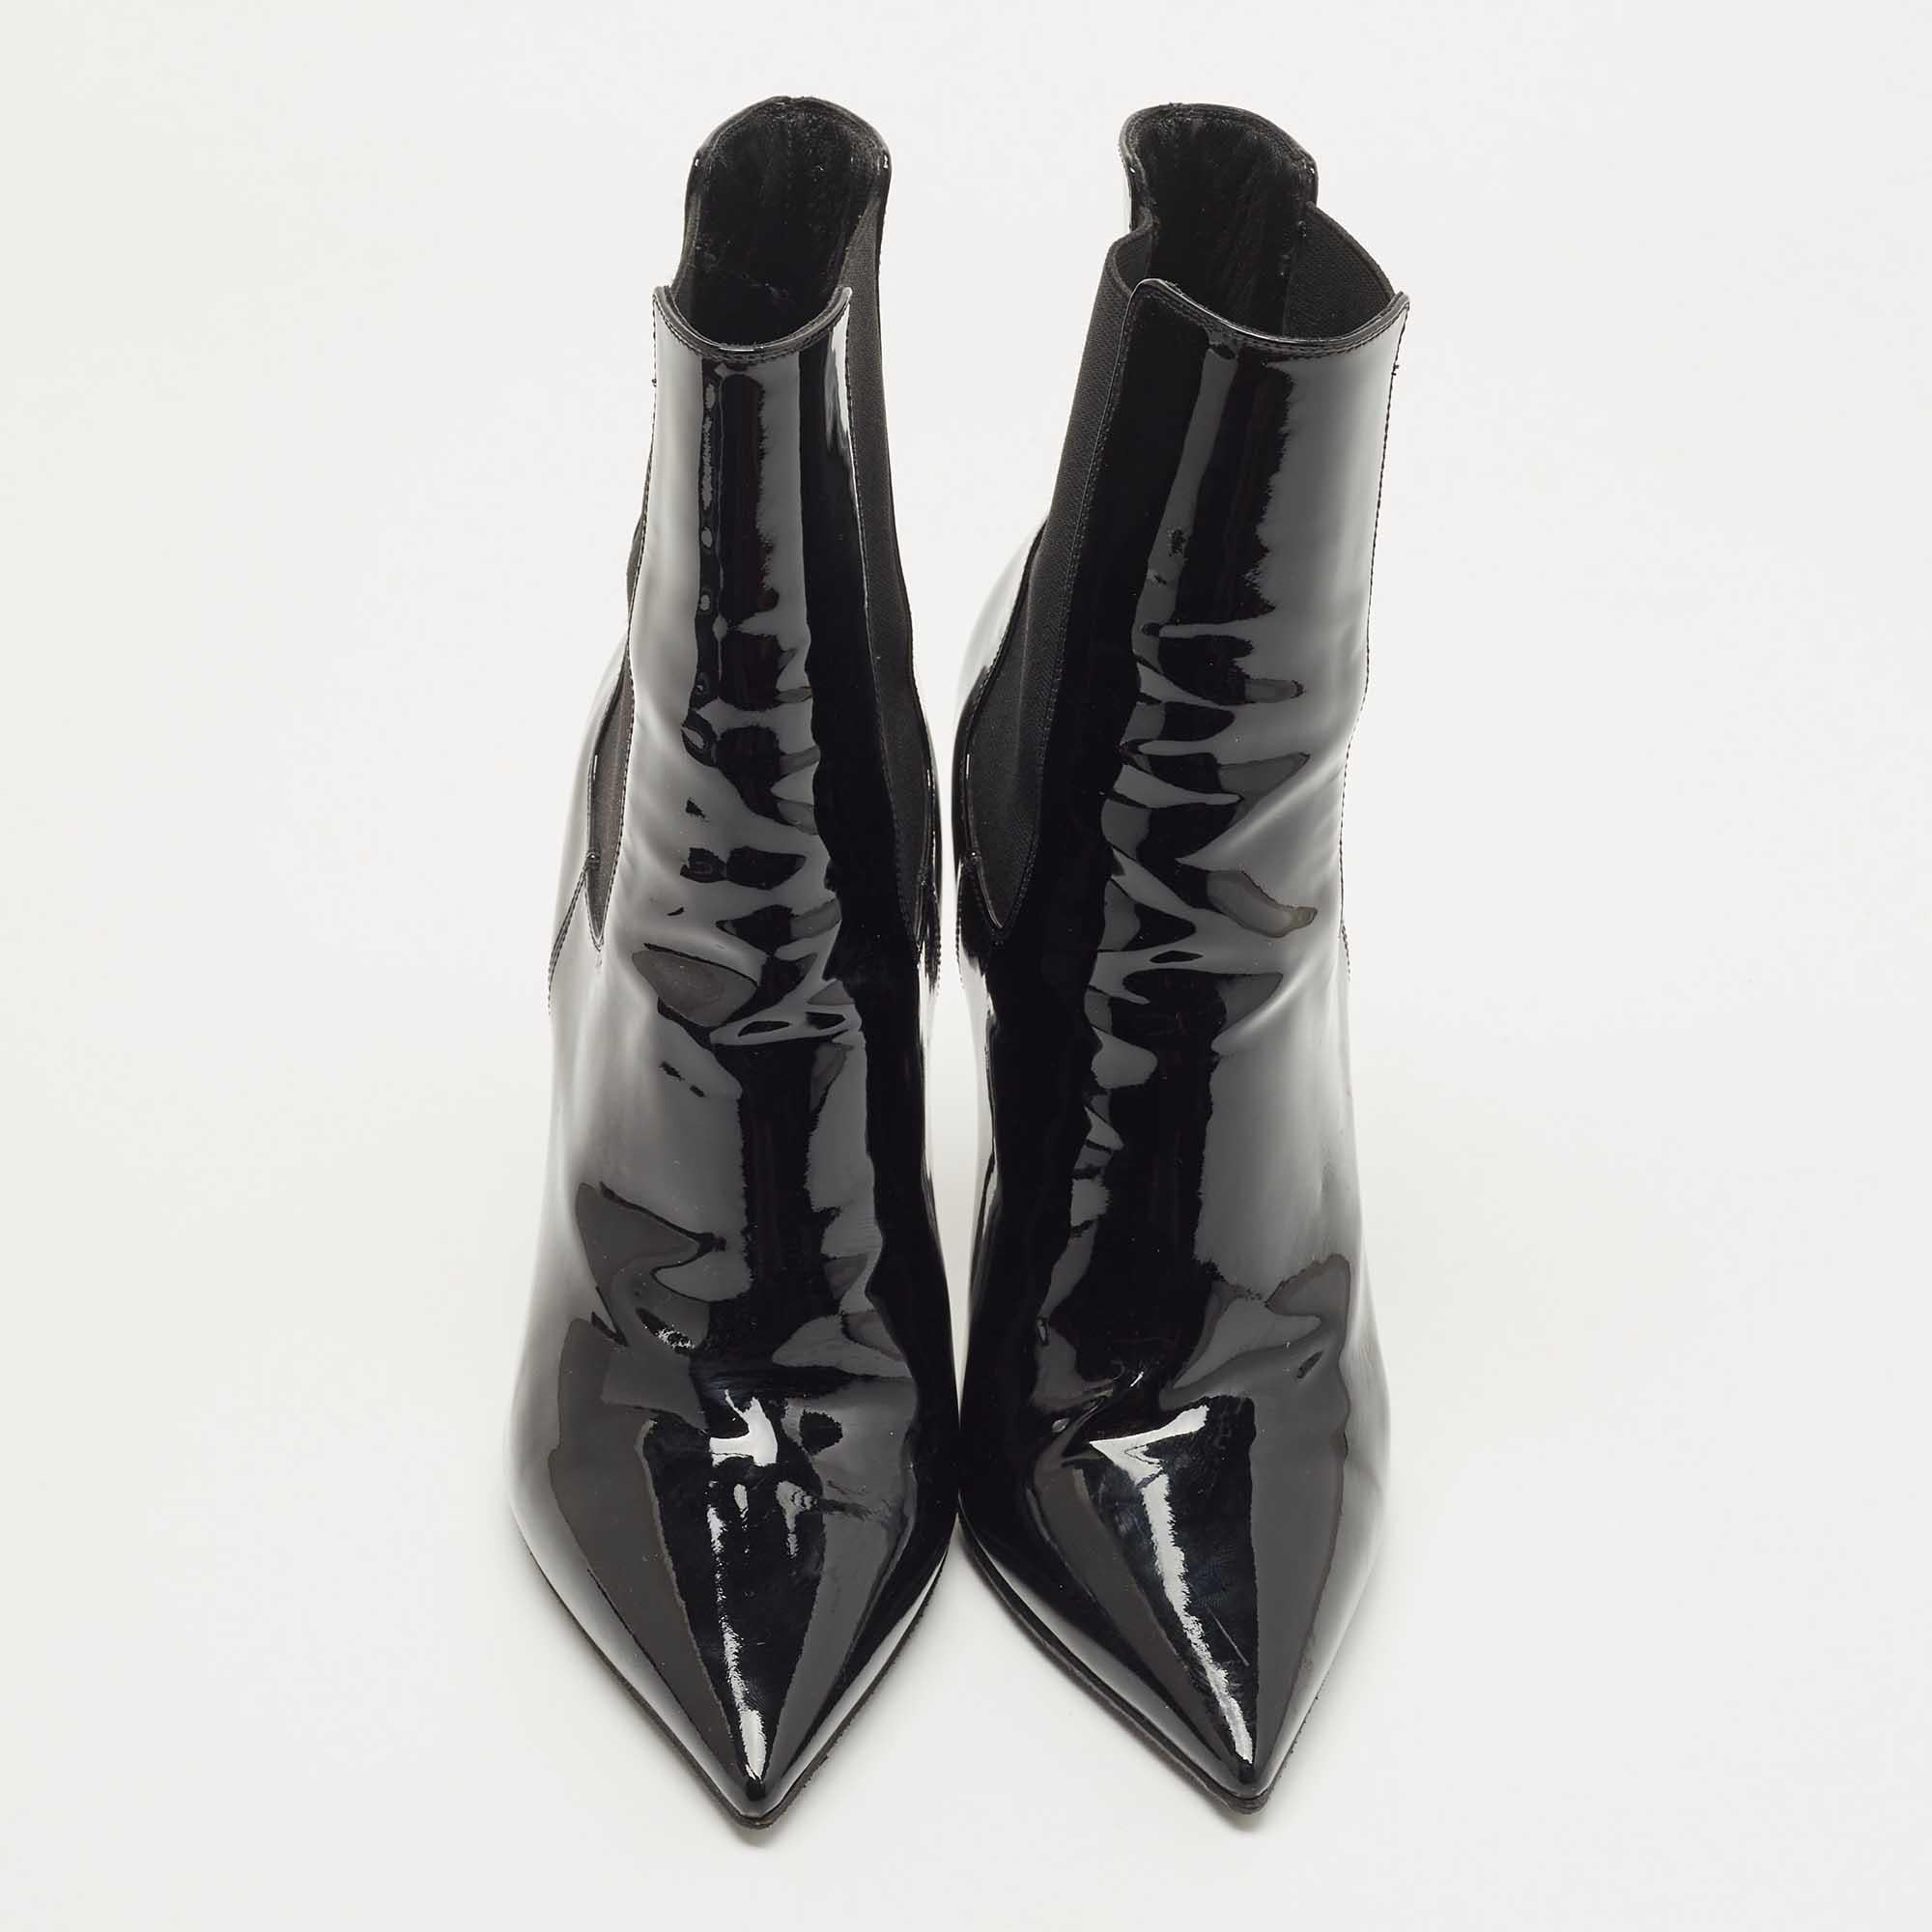 Women's Saint Laurent Paris Black Patent Leather Opyum Pointed Toe Ankle Booties